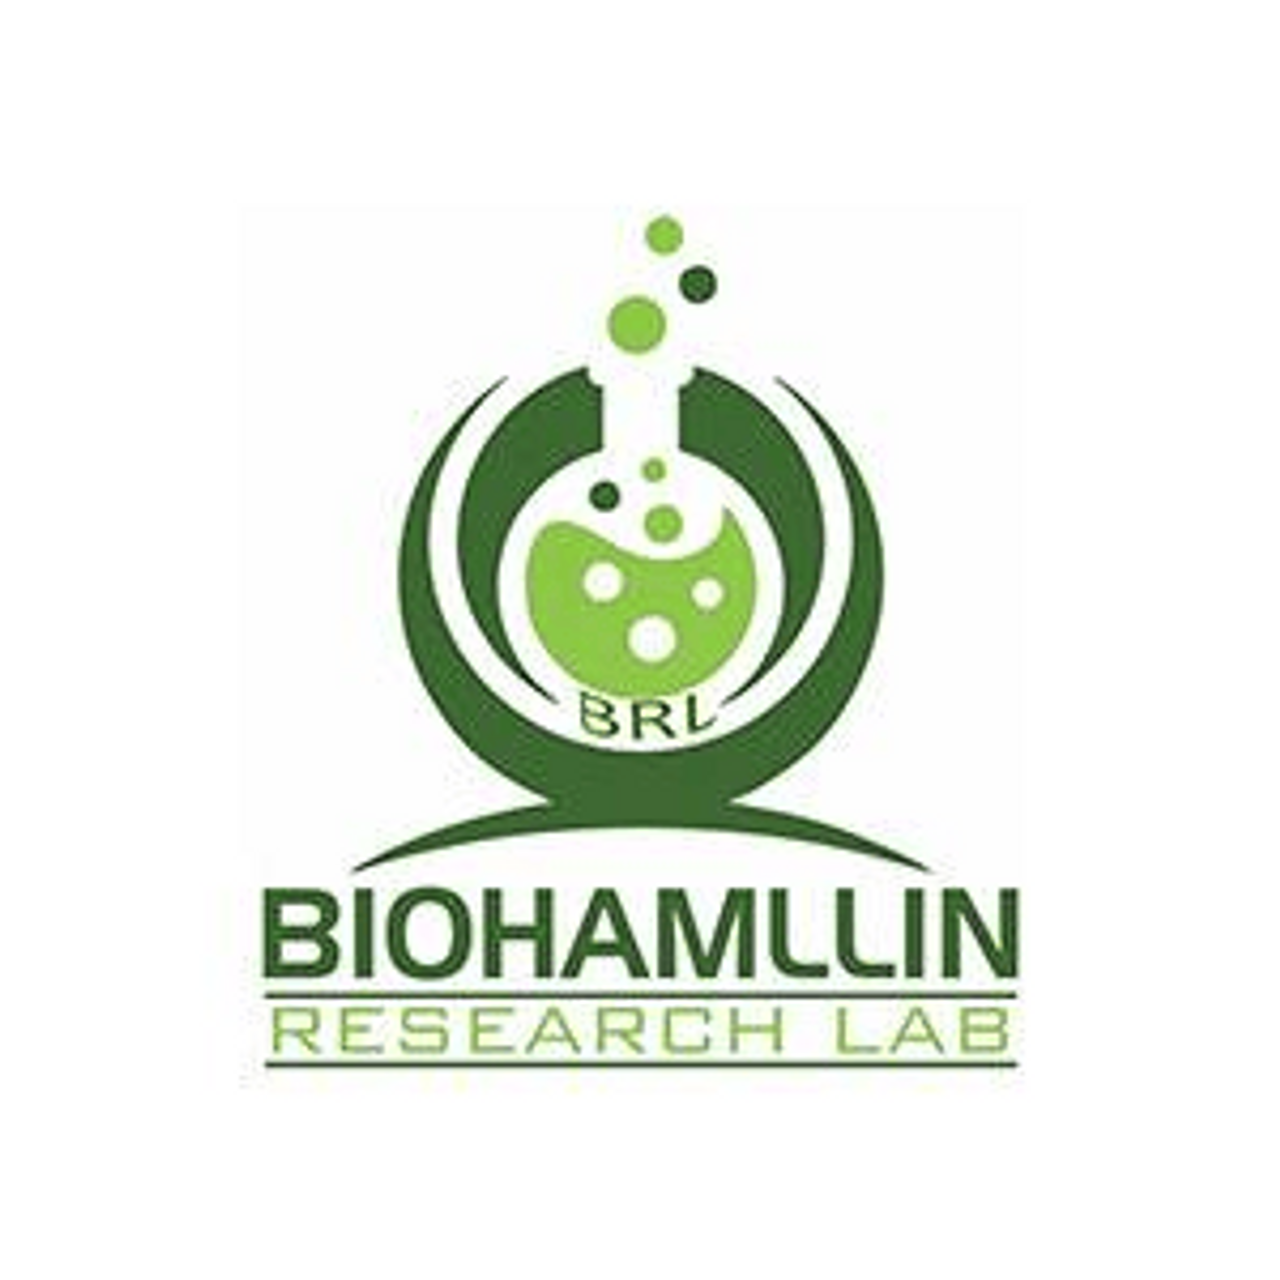 Biohamllin